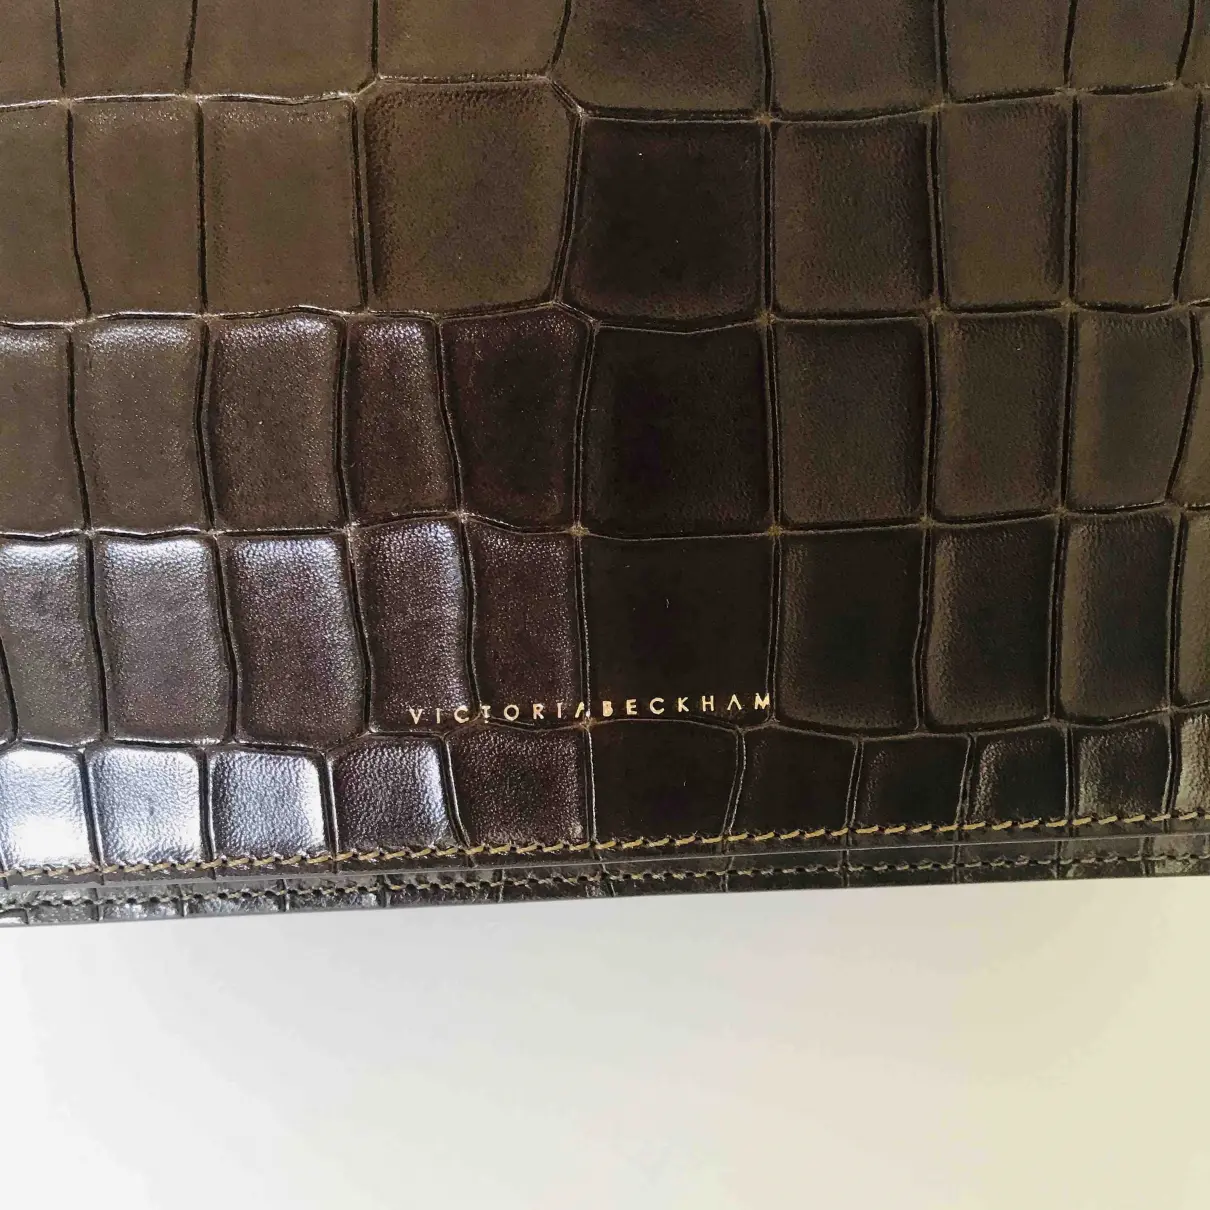 Buy Victoria Beckham Patent leather clutch bag online